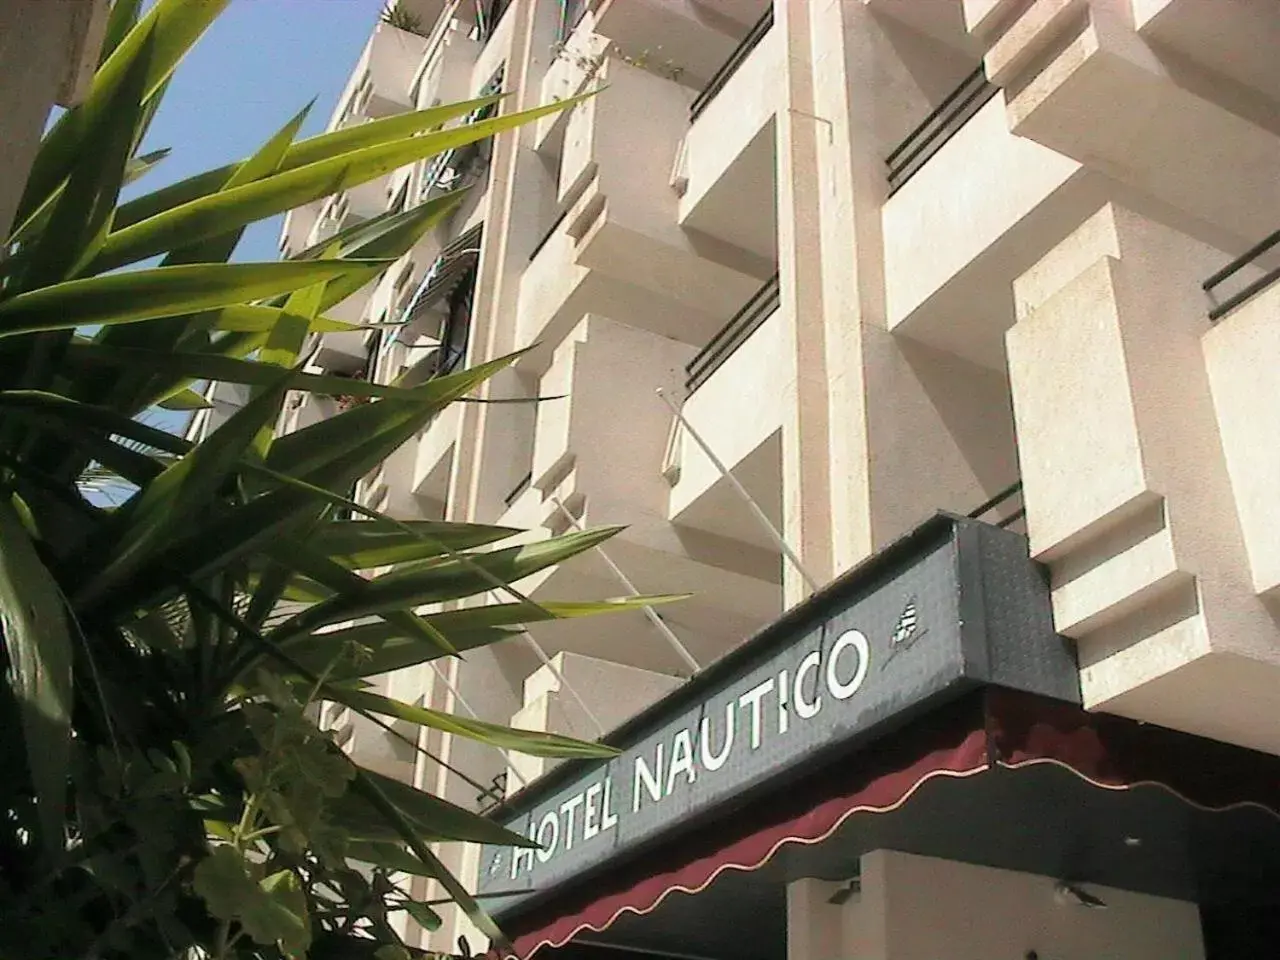 Facade/entrance in Hotel Nautico